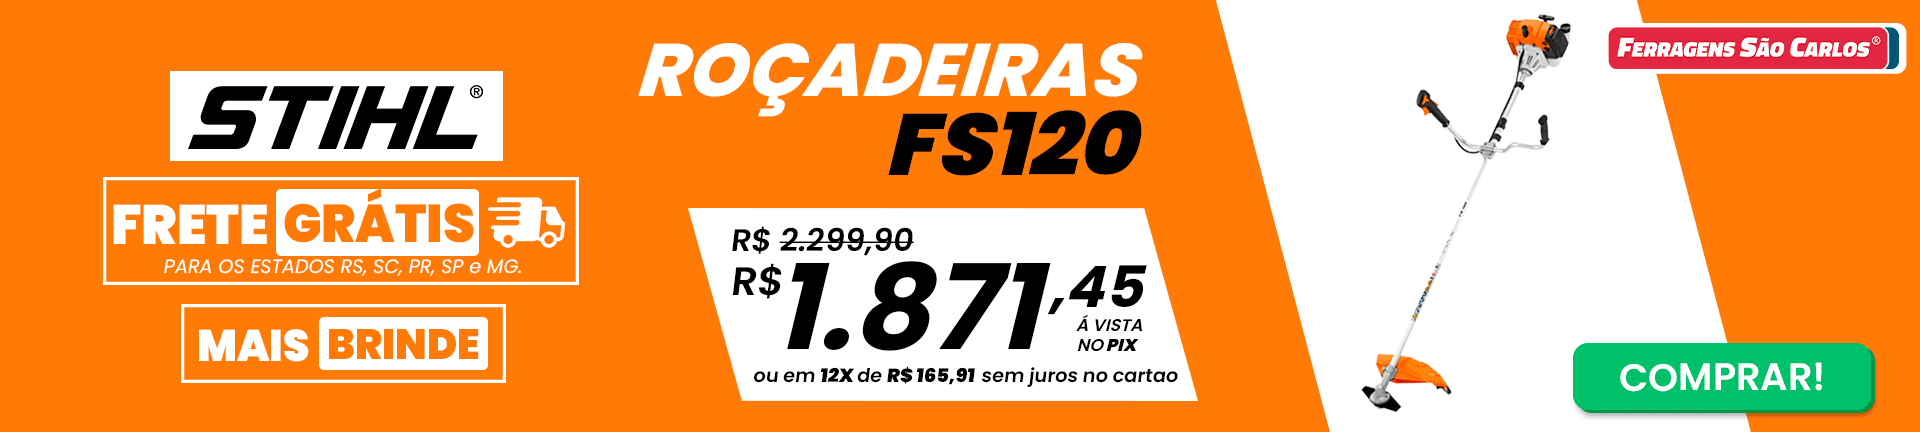 rocadeira-stihl-fs120-frete-gratis-ferragens-sao-carlos